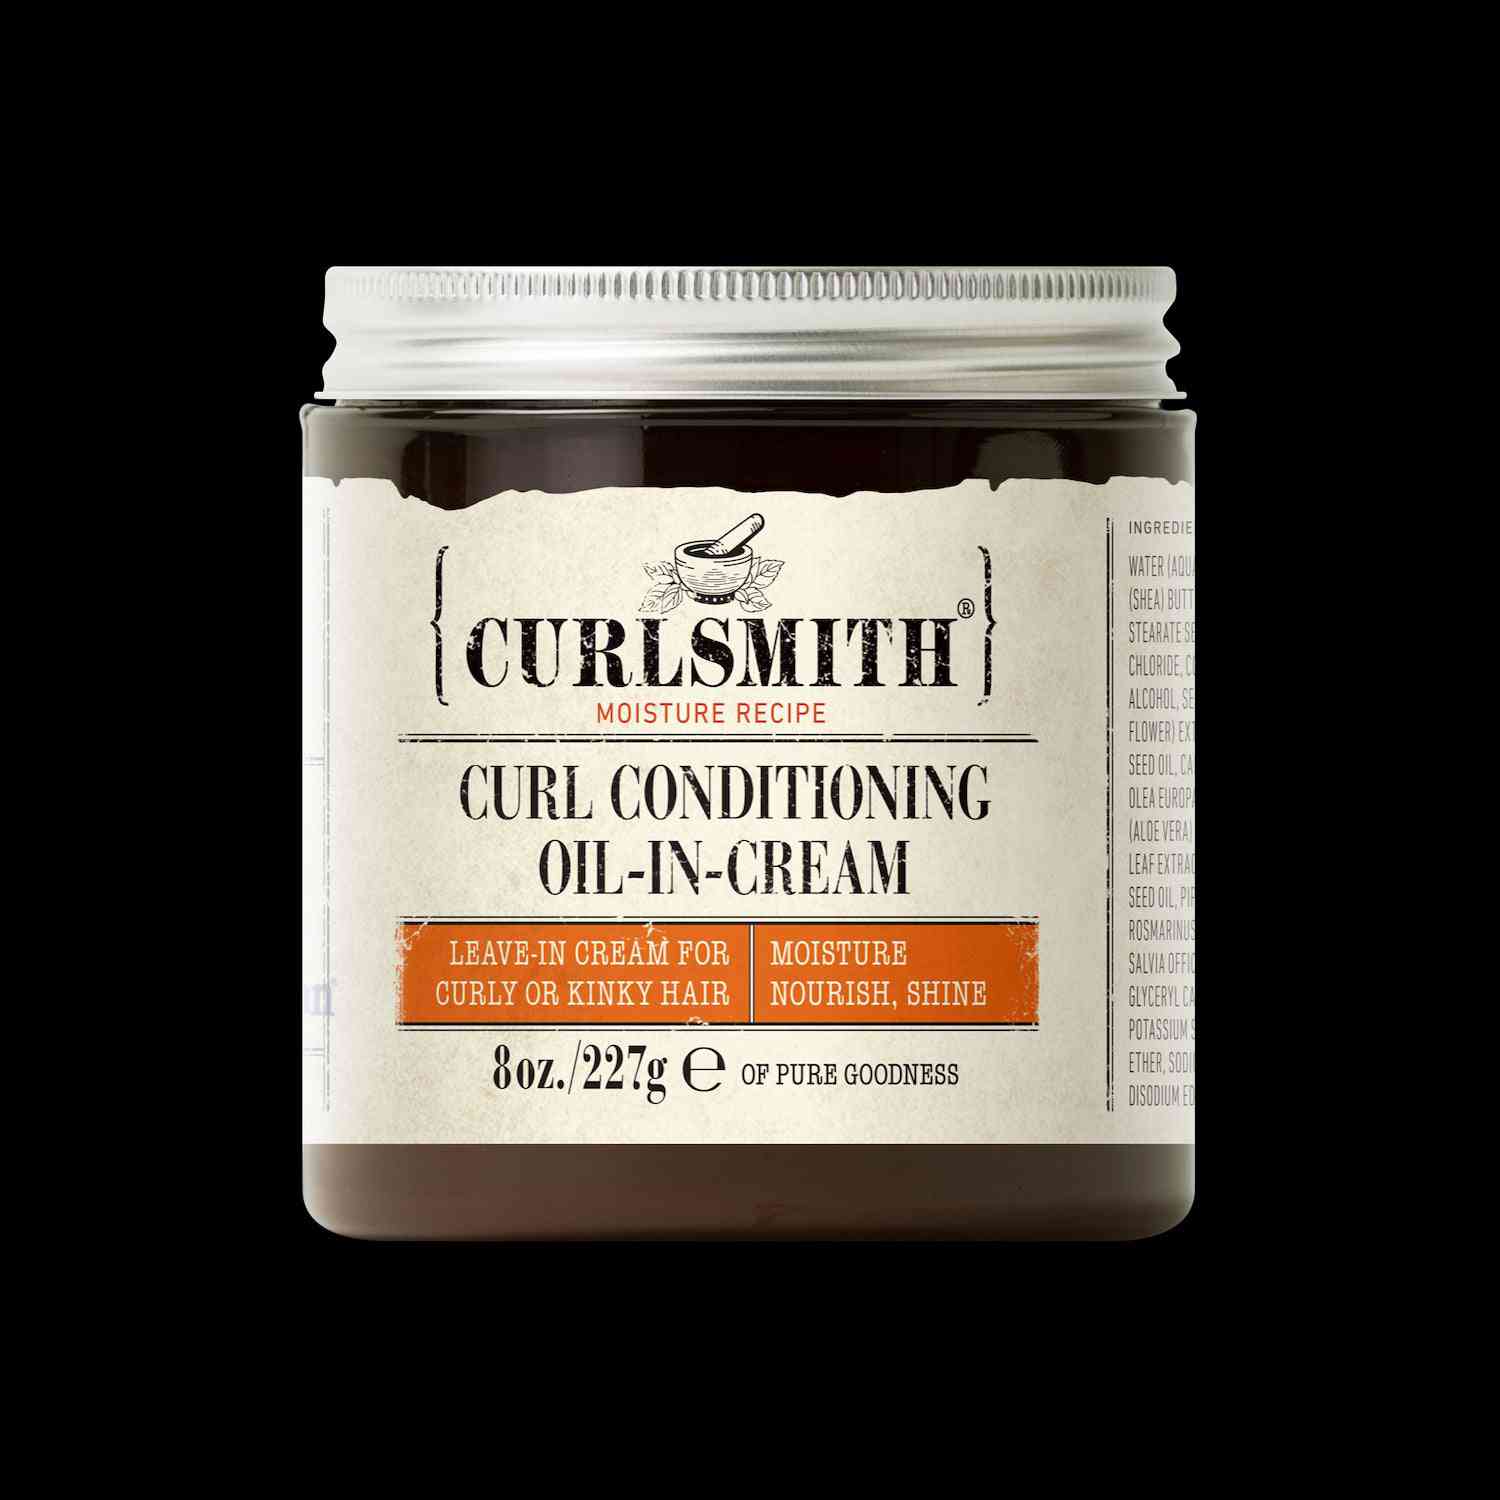 Curlsmith curl conditioning oil in cream